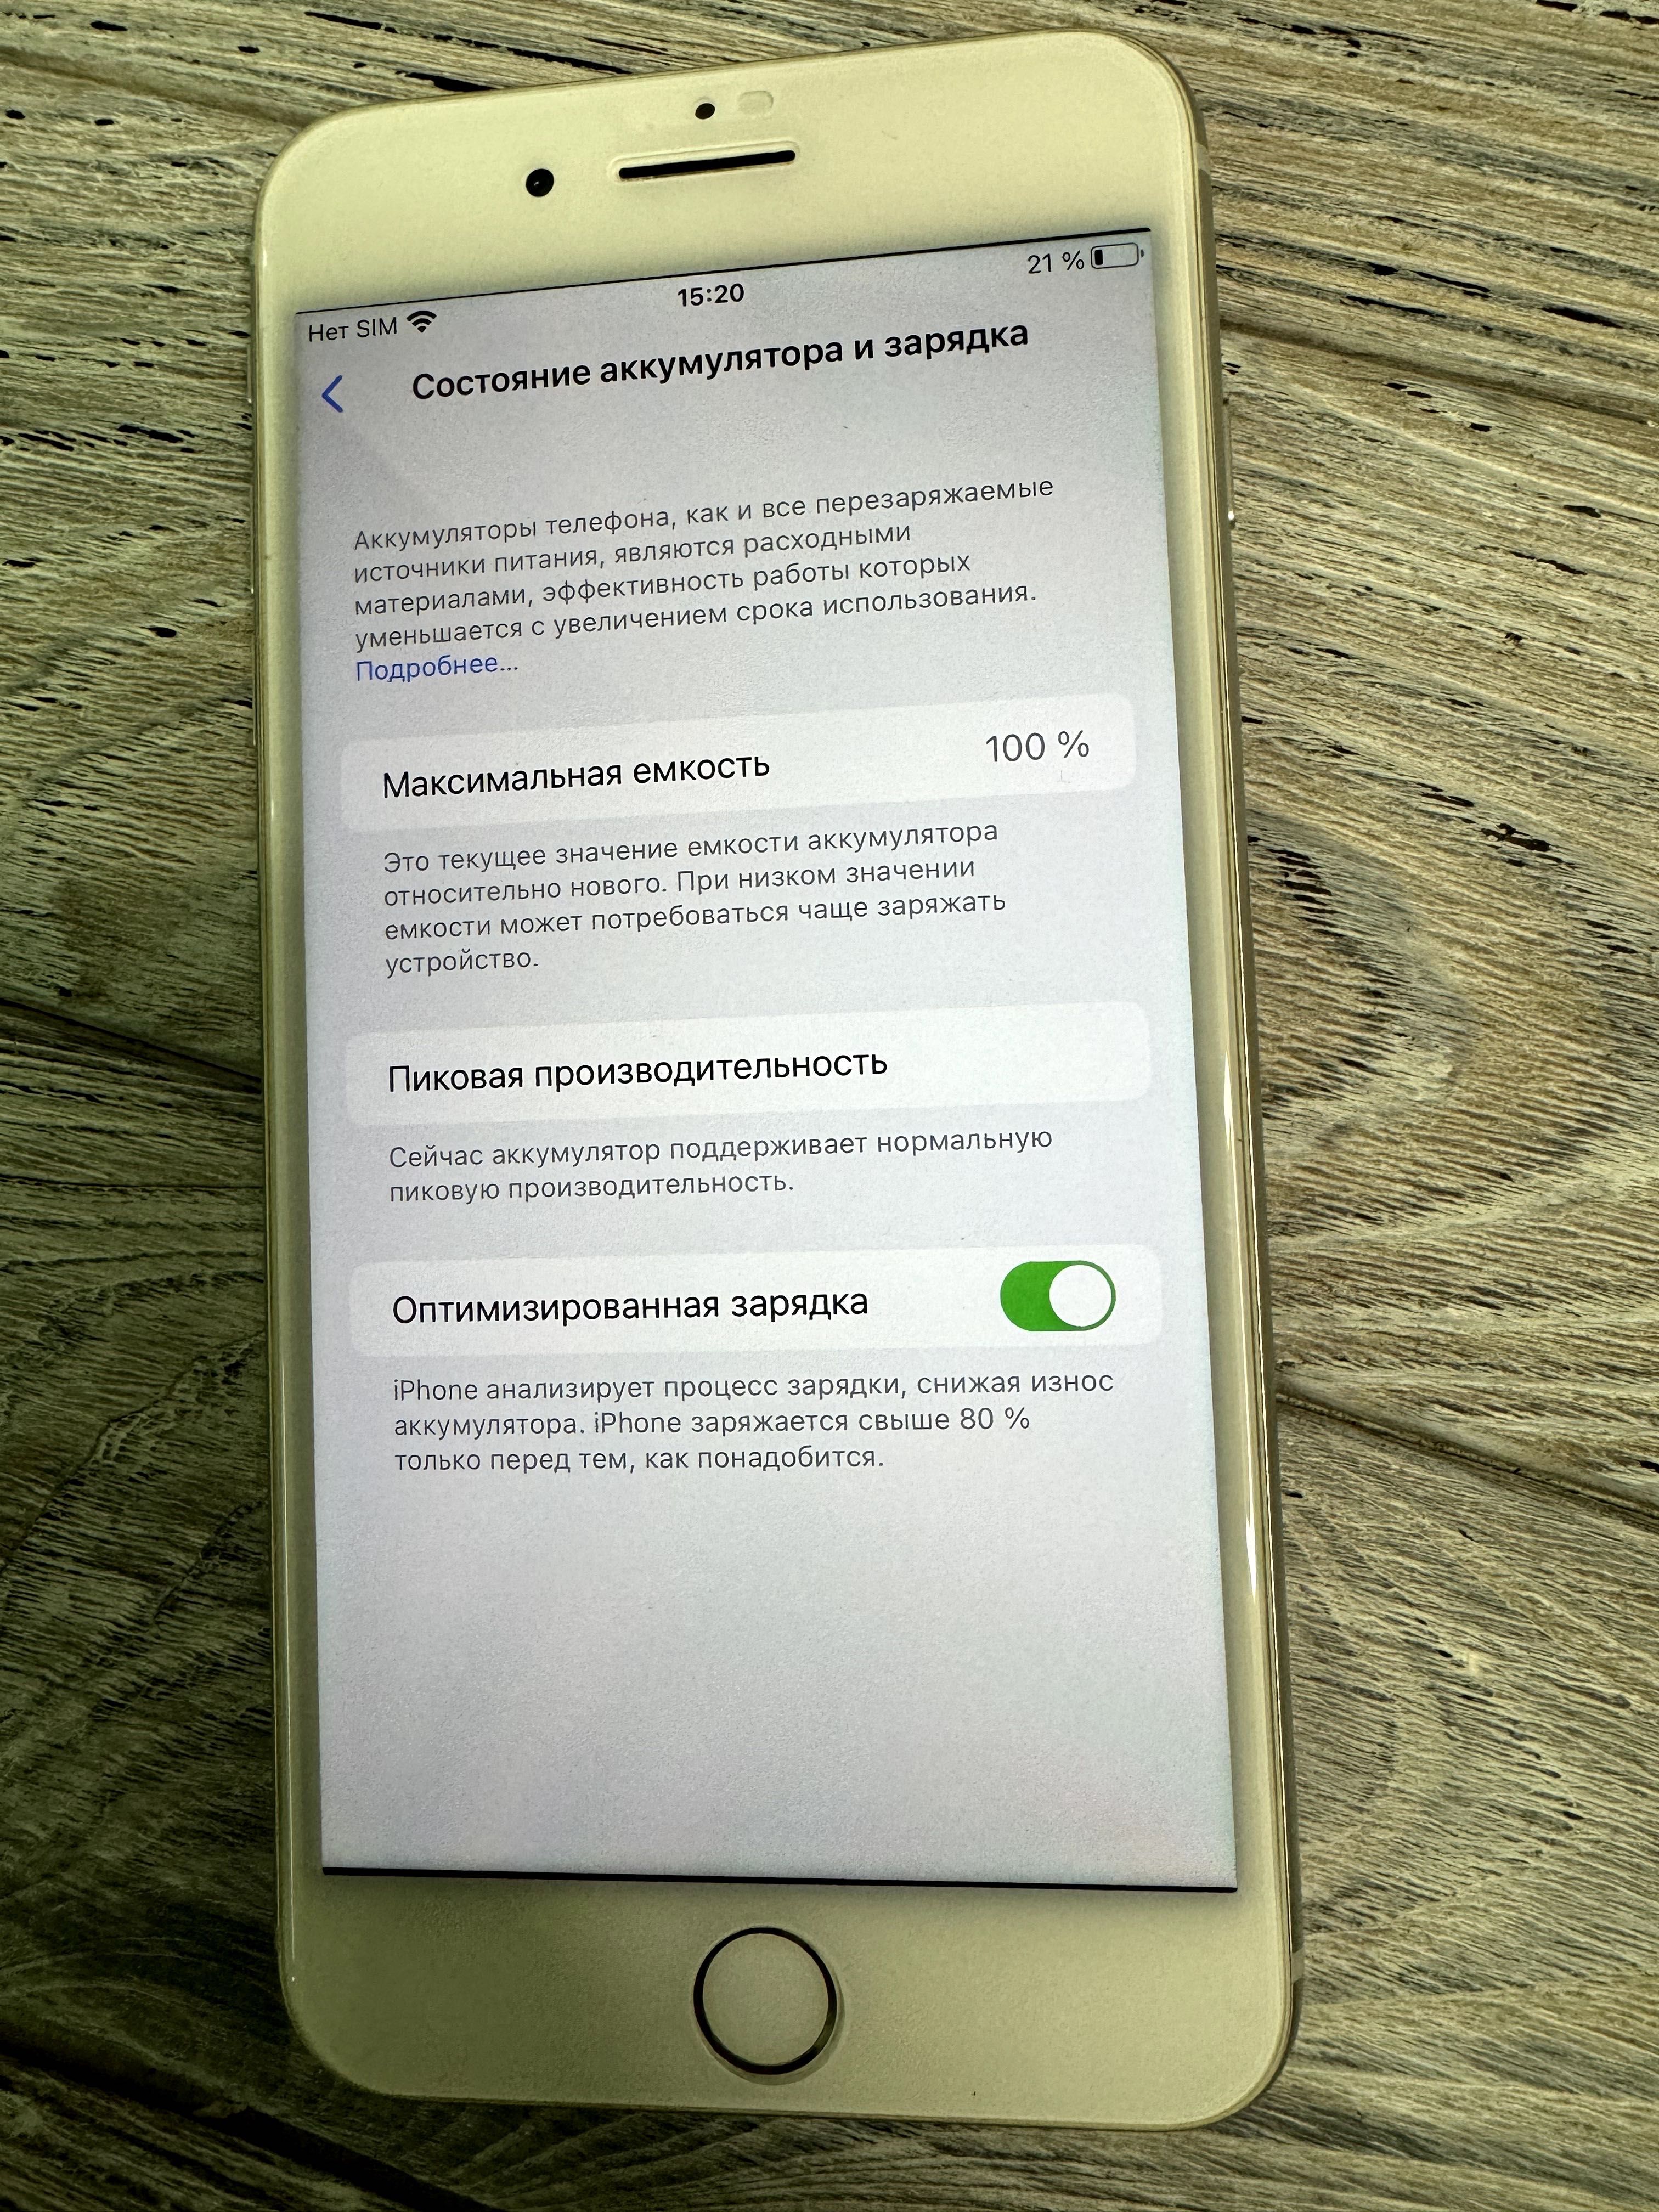 iphone 8 plus 64gb white батарея новая 100%  гарантия Магазин 5200гр